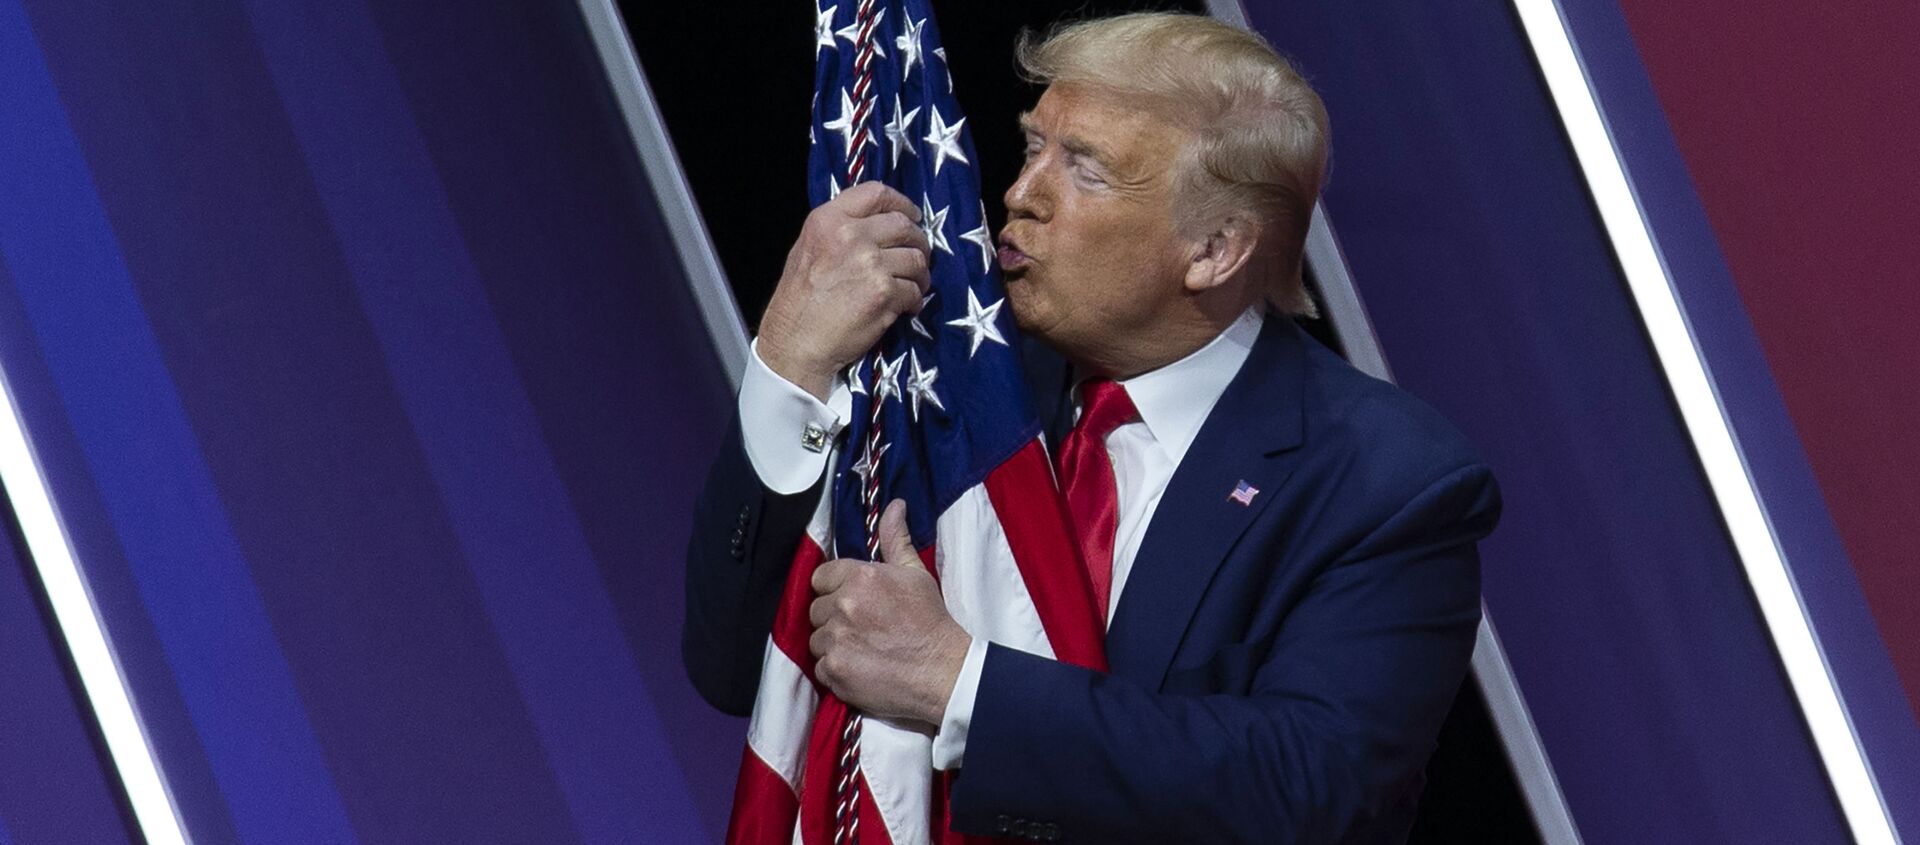 Donald Trump hôn cờ Mỹ - Sputnik Việt Nam, 1920, 27.04.2020